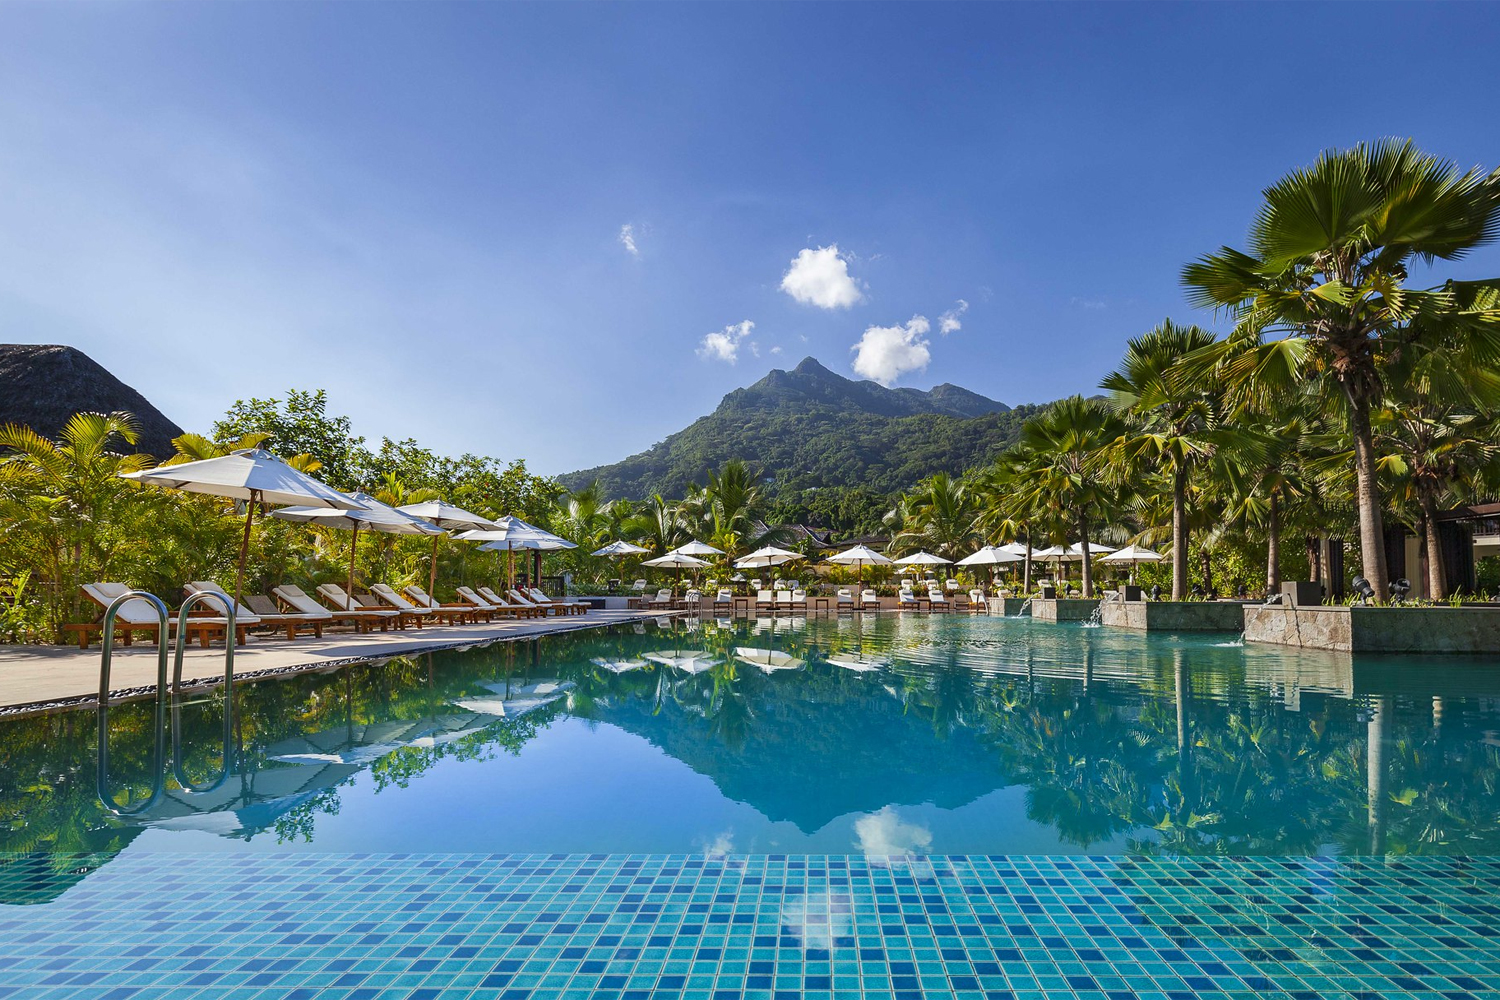 UAE hotel group opens Seychelles resort - Hotelier Middle East